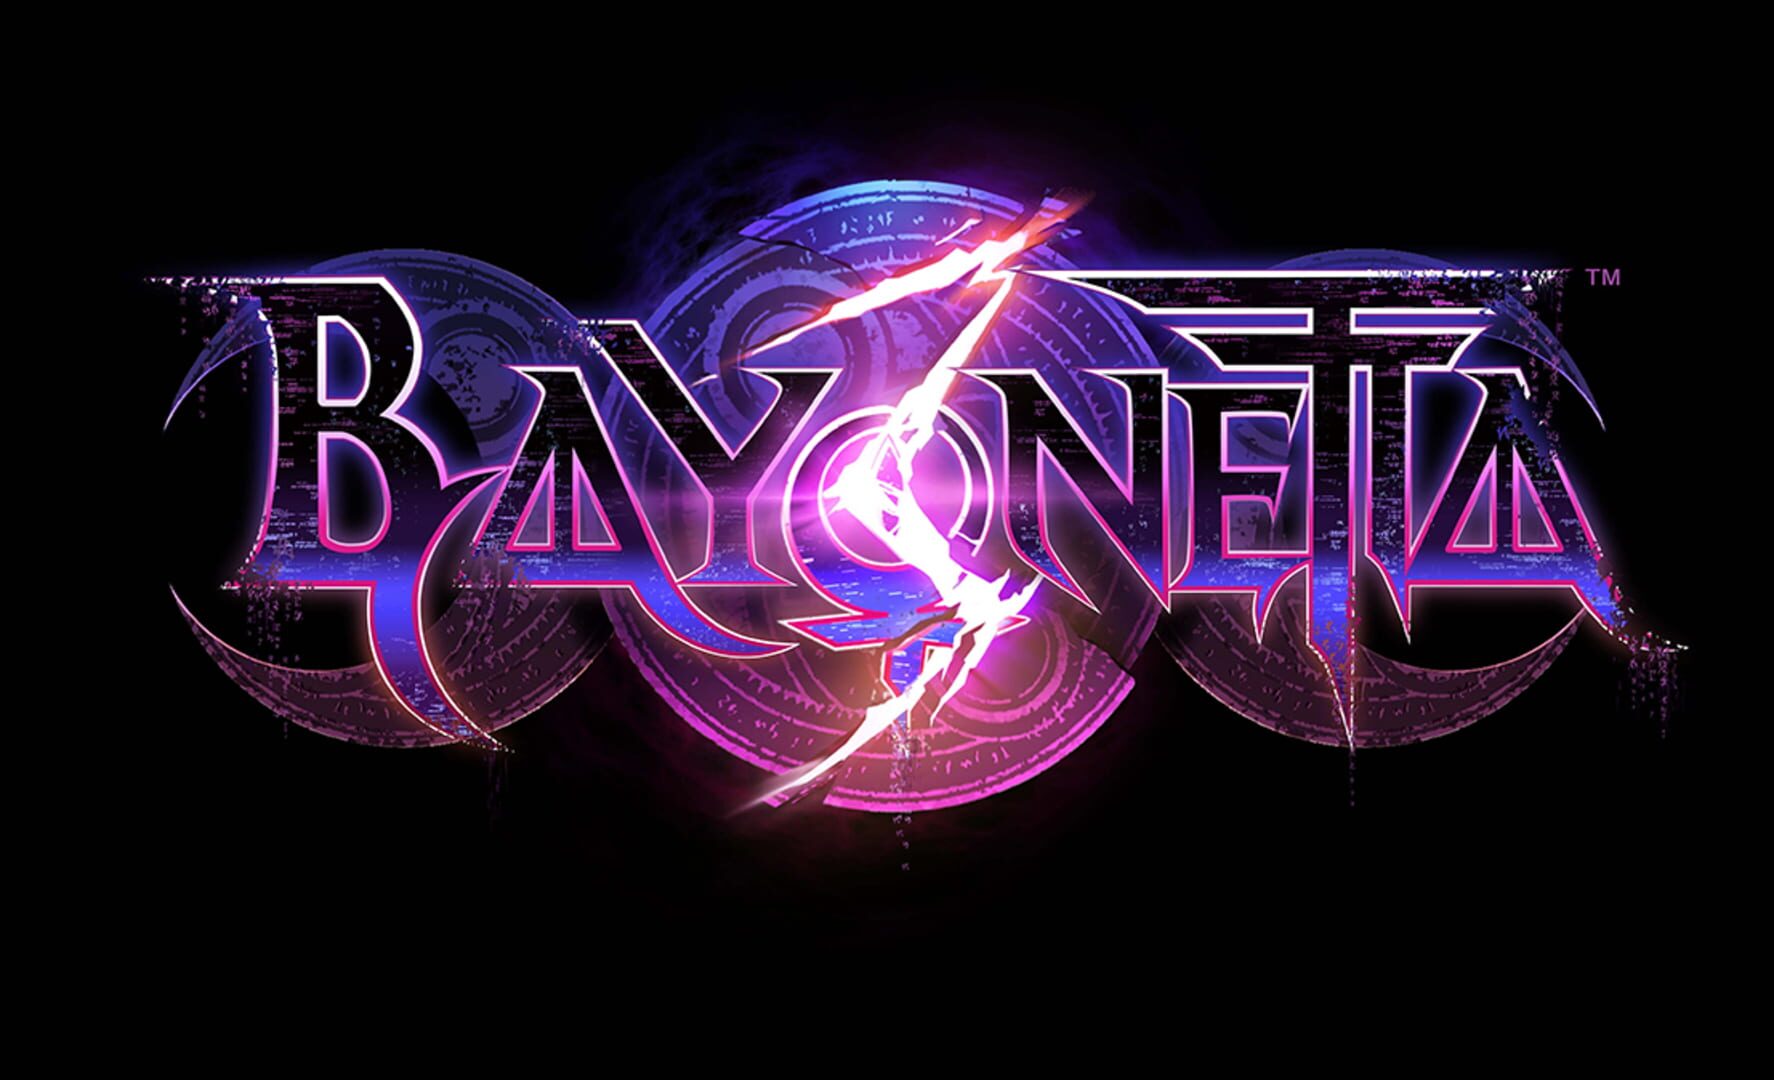 Artwork for Bayonetta 3